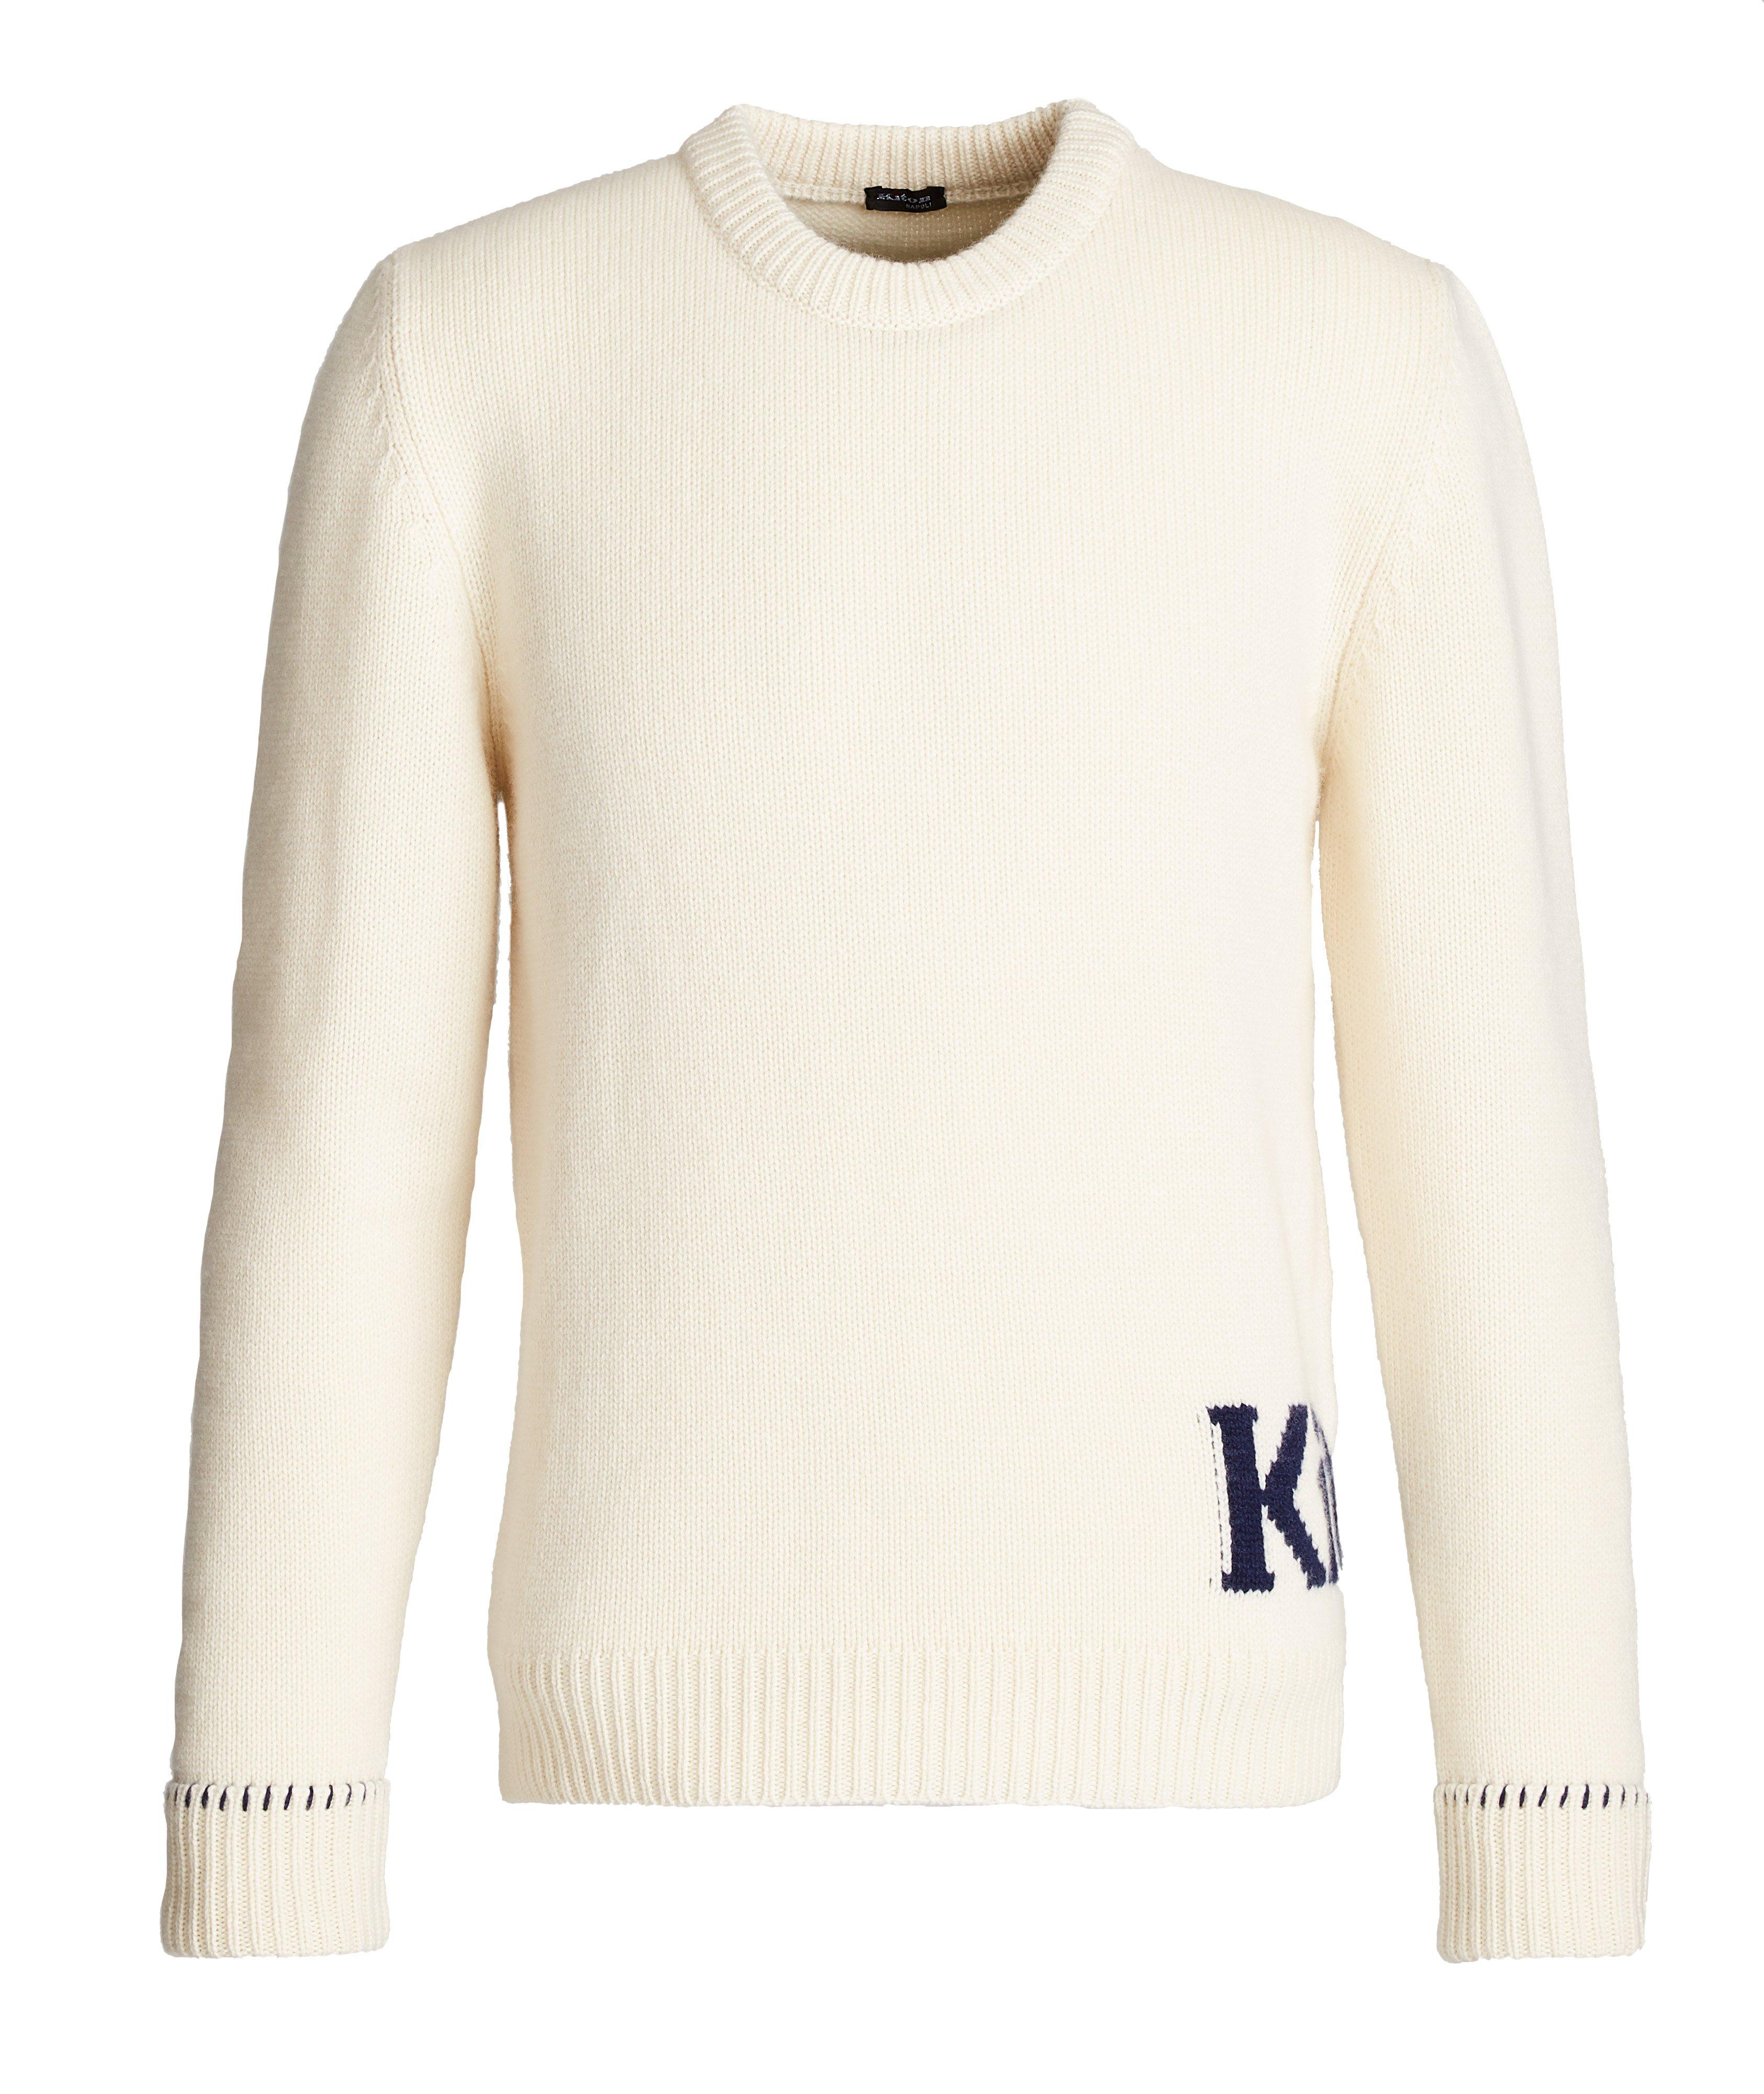 Knit Cashmere Sweater image 0